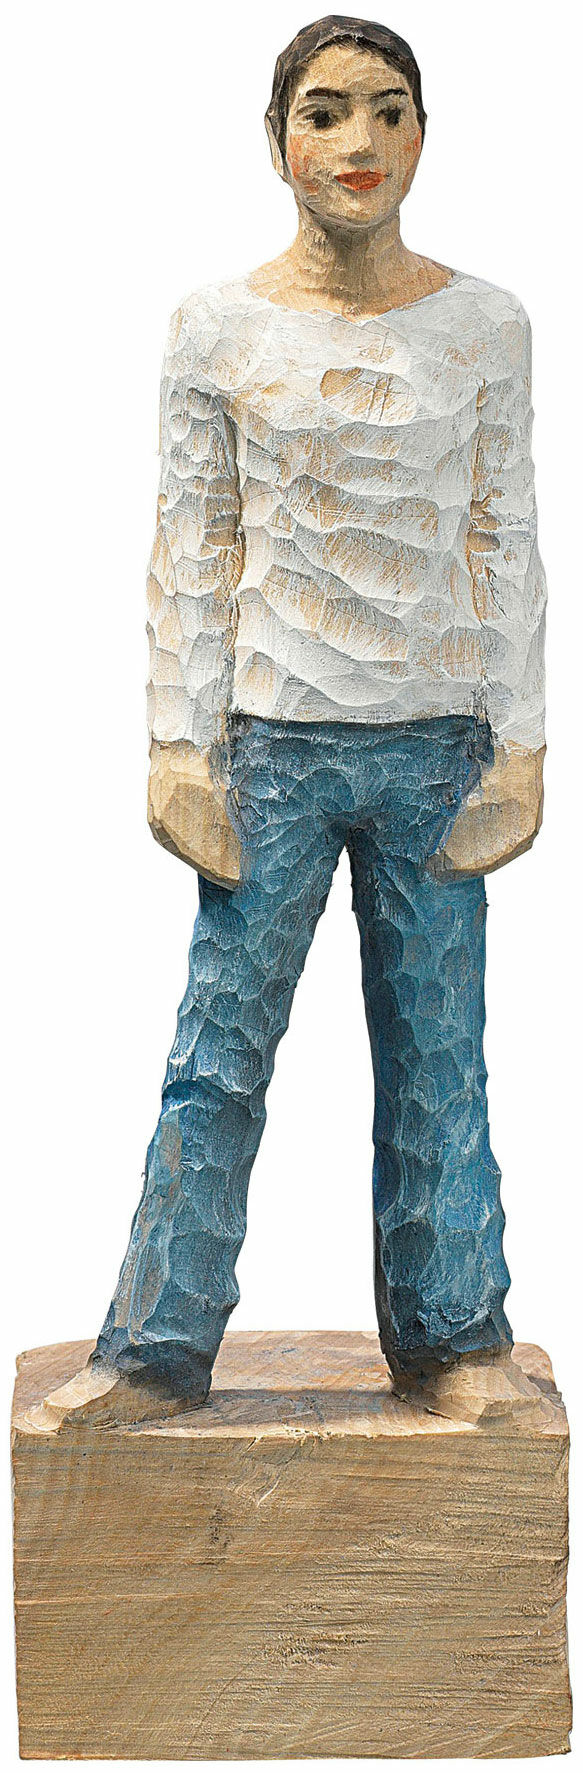 Sculpture "Man", cast wood finish by Michael Pickl